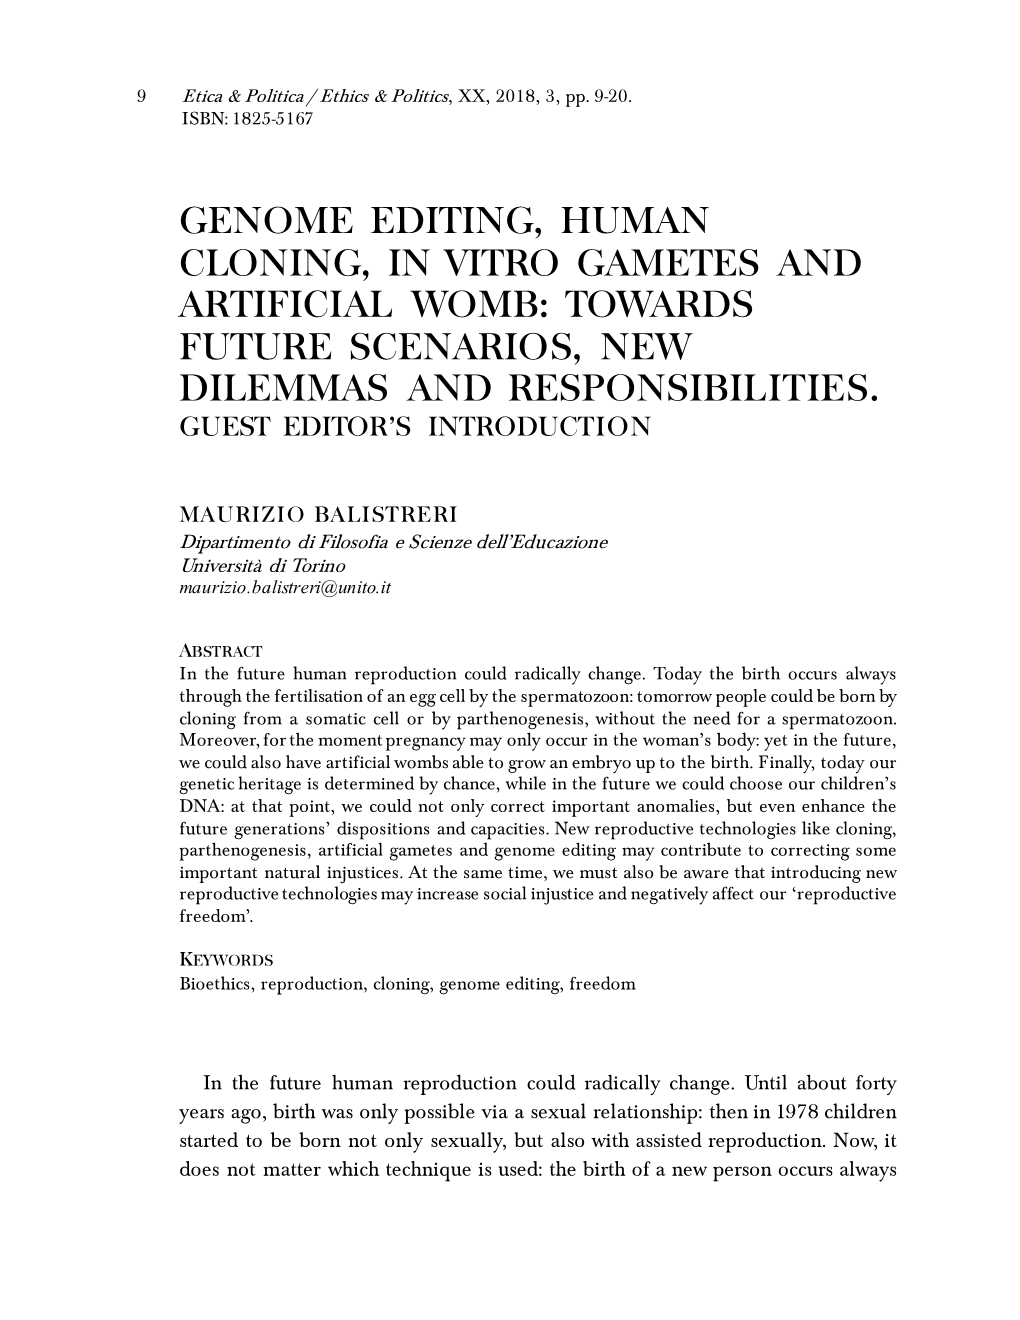 Genome Editing, Human Cloning, in Vitro Gametes and Artificial Womb: Towards Future Scenarios, New Dilemmas and Responsibilities